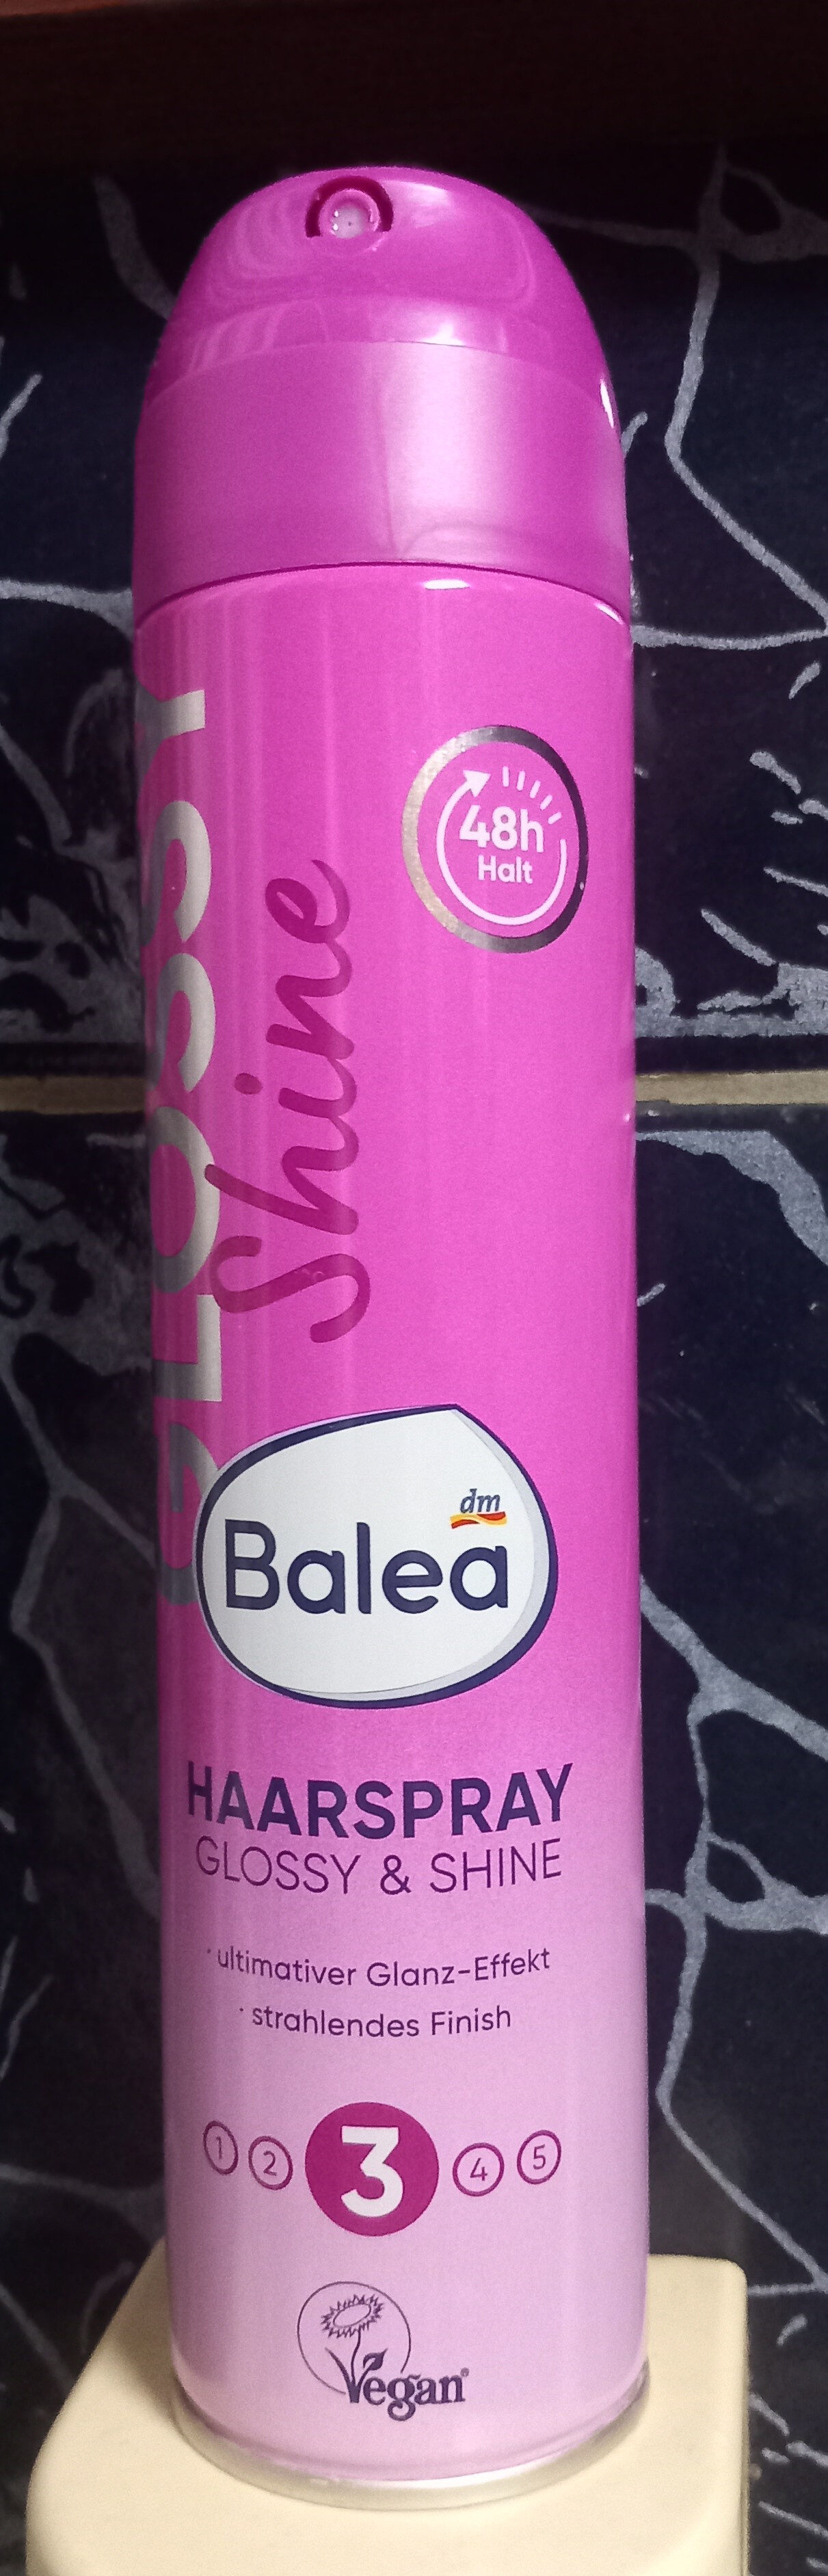 Balea Hairspray Gloss & Shine - Produkto - mk